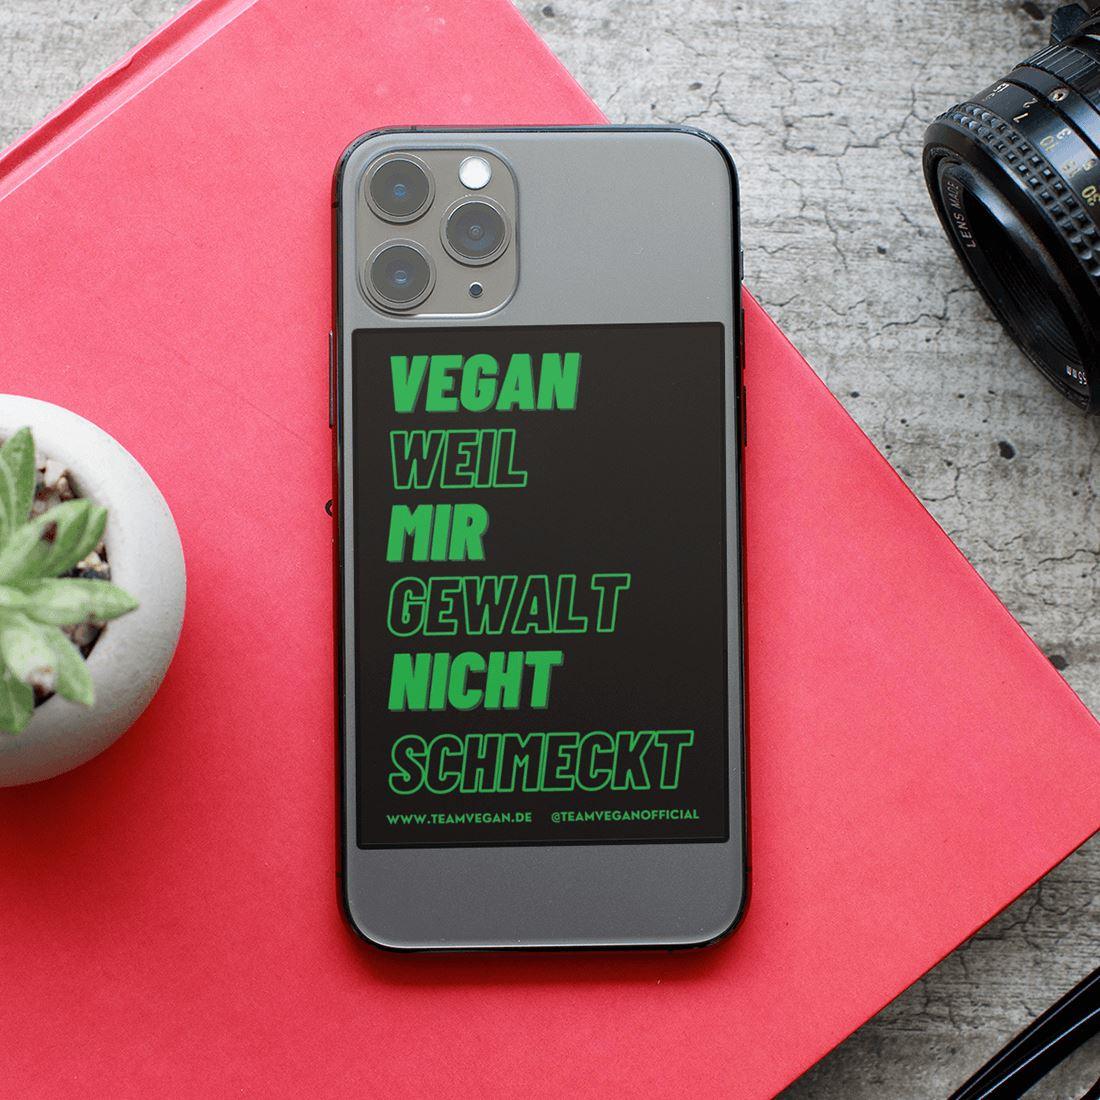 Vegan Weil Mir Gewalt Nicht Schmeckt - 20 Sticker - Team Vegan © vegan t shirt